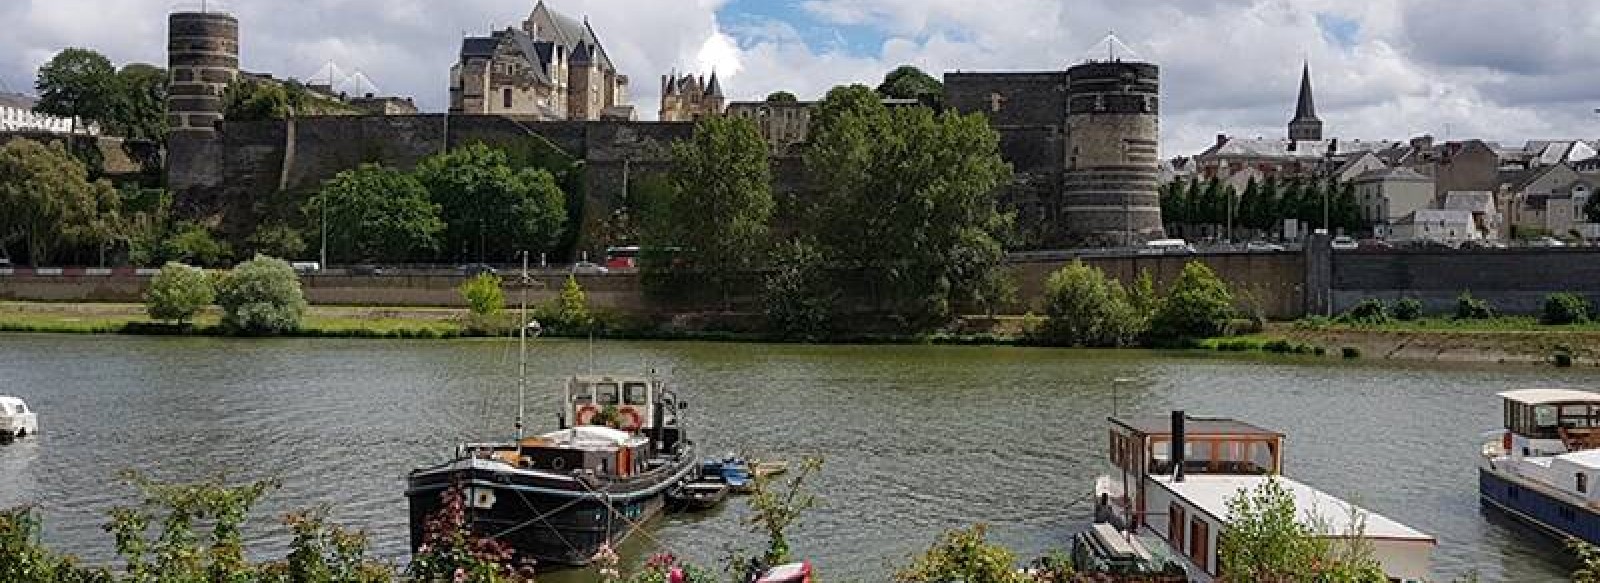 La Loire a Velo de Tours a Nantes - 277 km